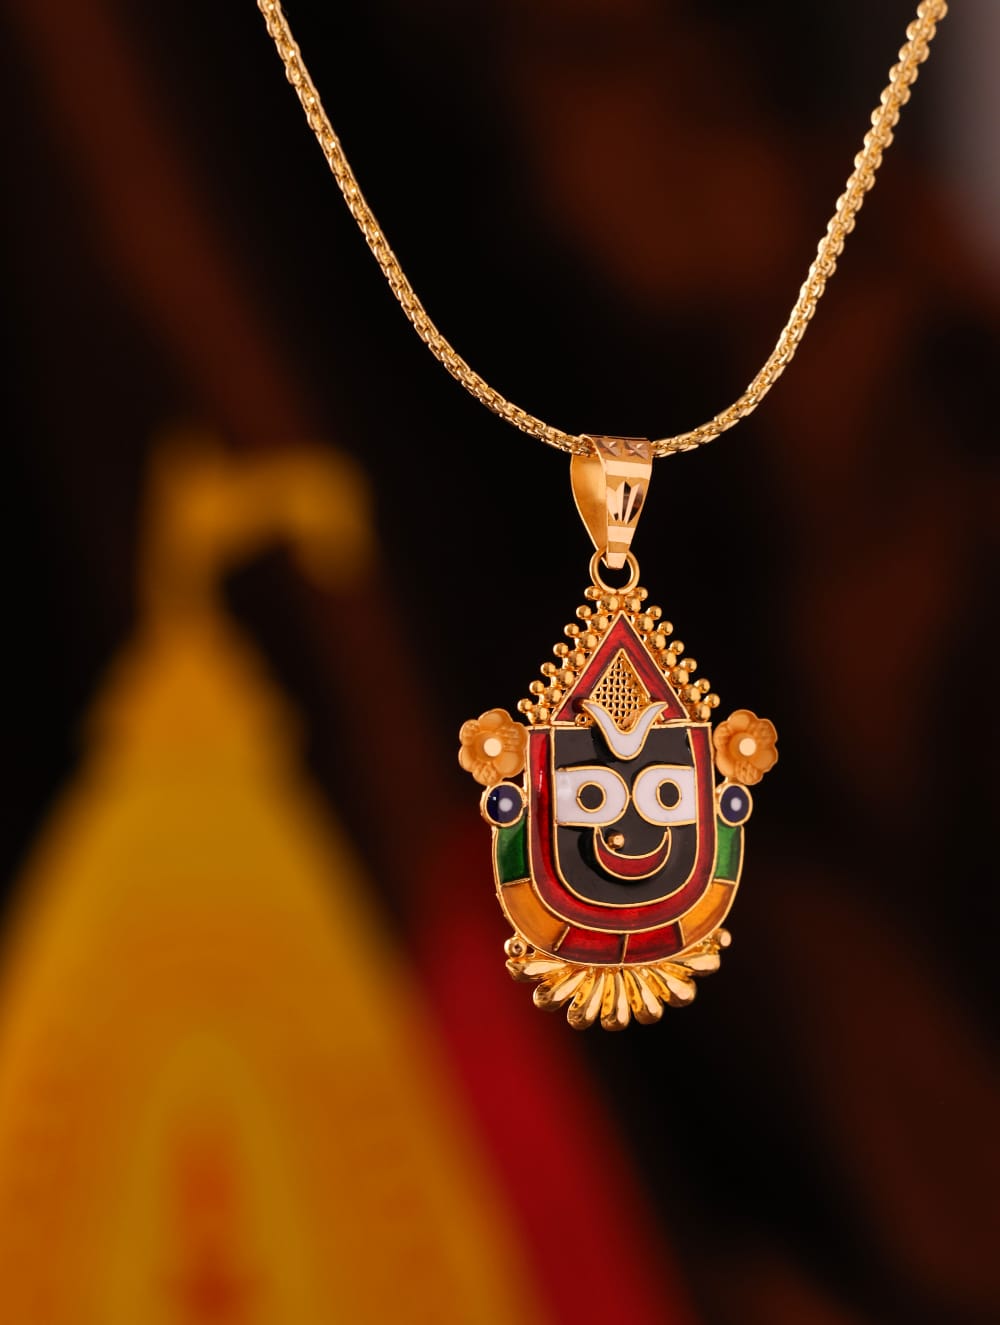 Bring Home Divinity this Rath Yatra with Senco Gold & Diamonds